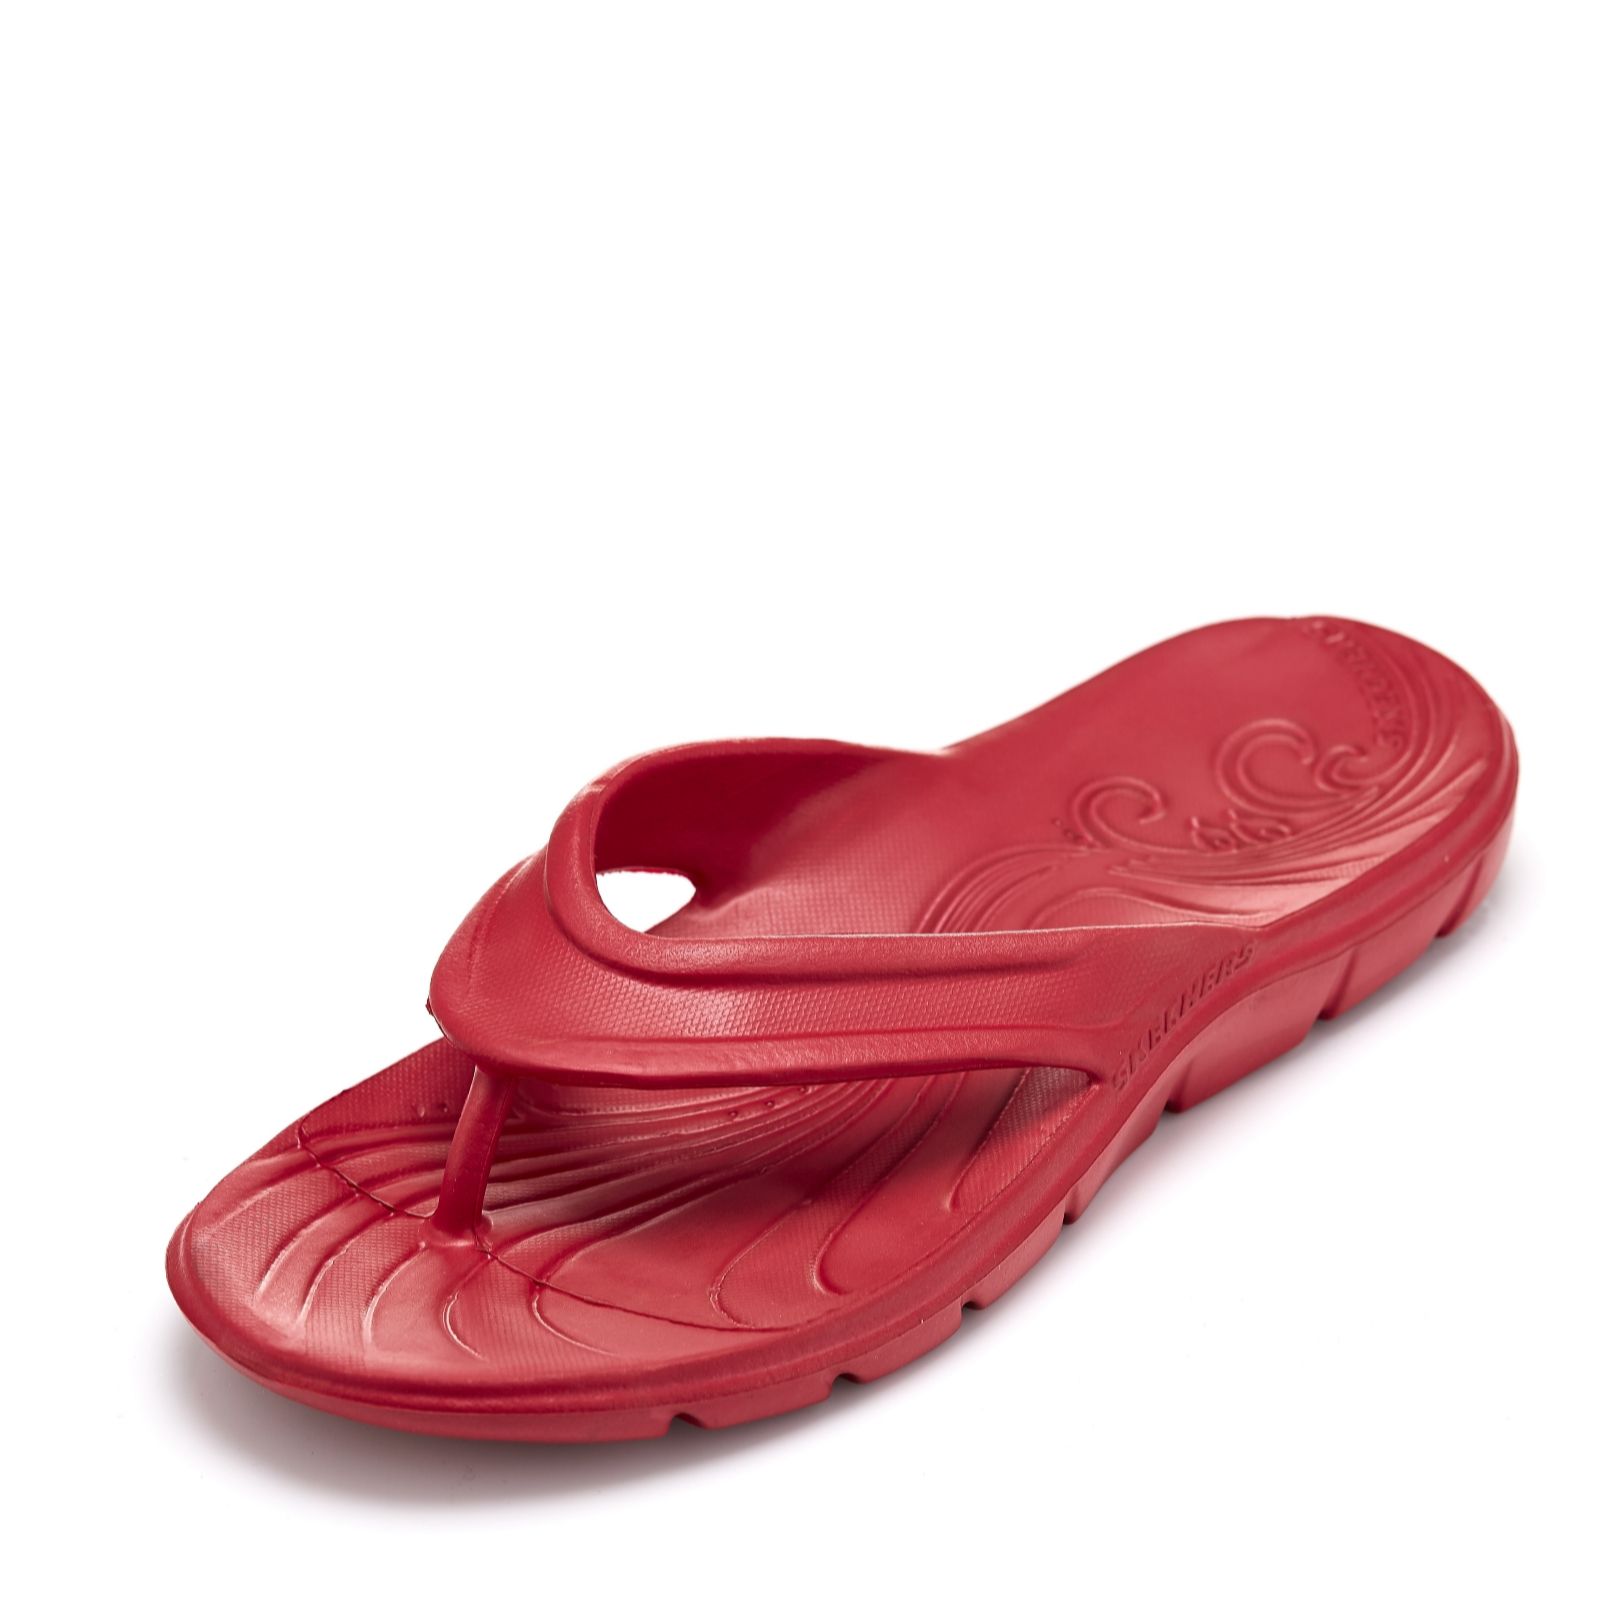 skechers toe post sandals uk